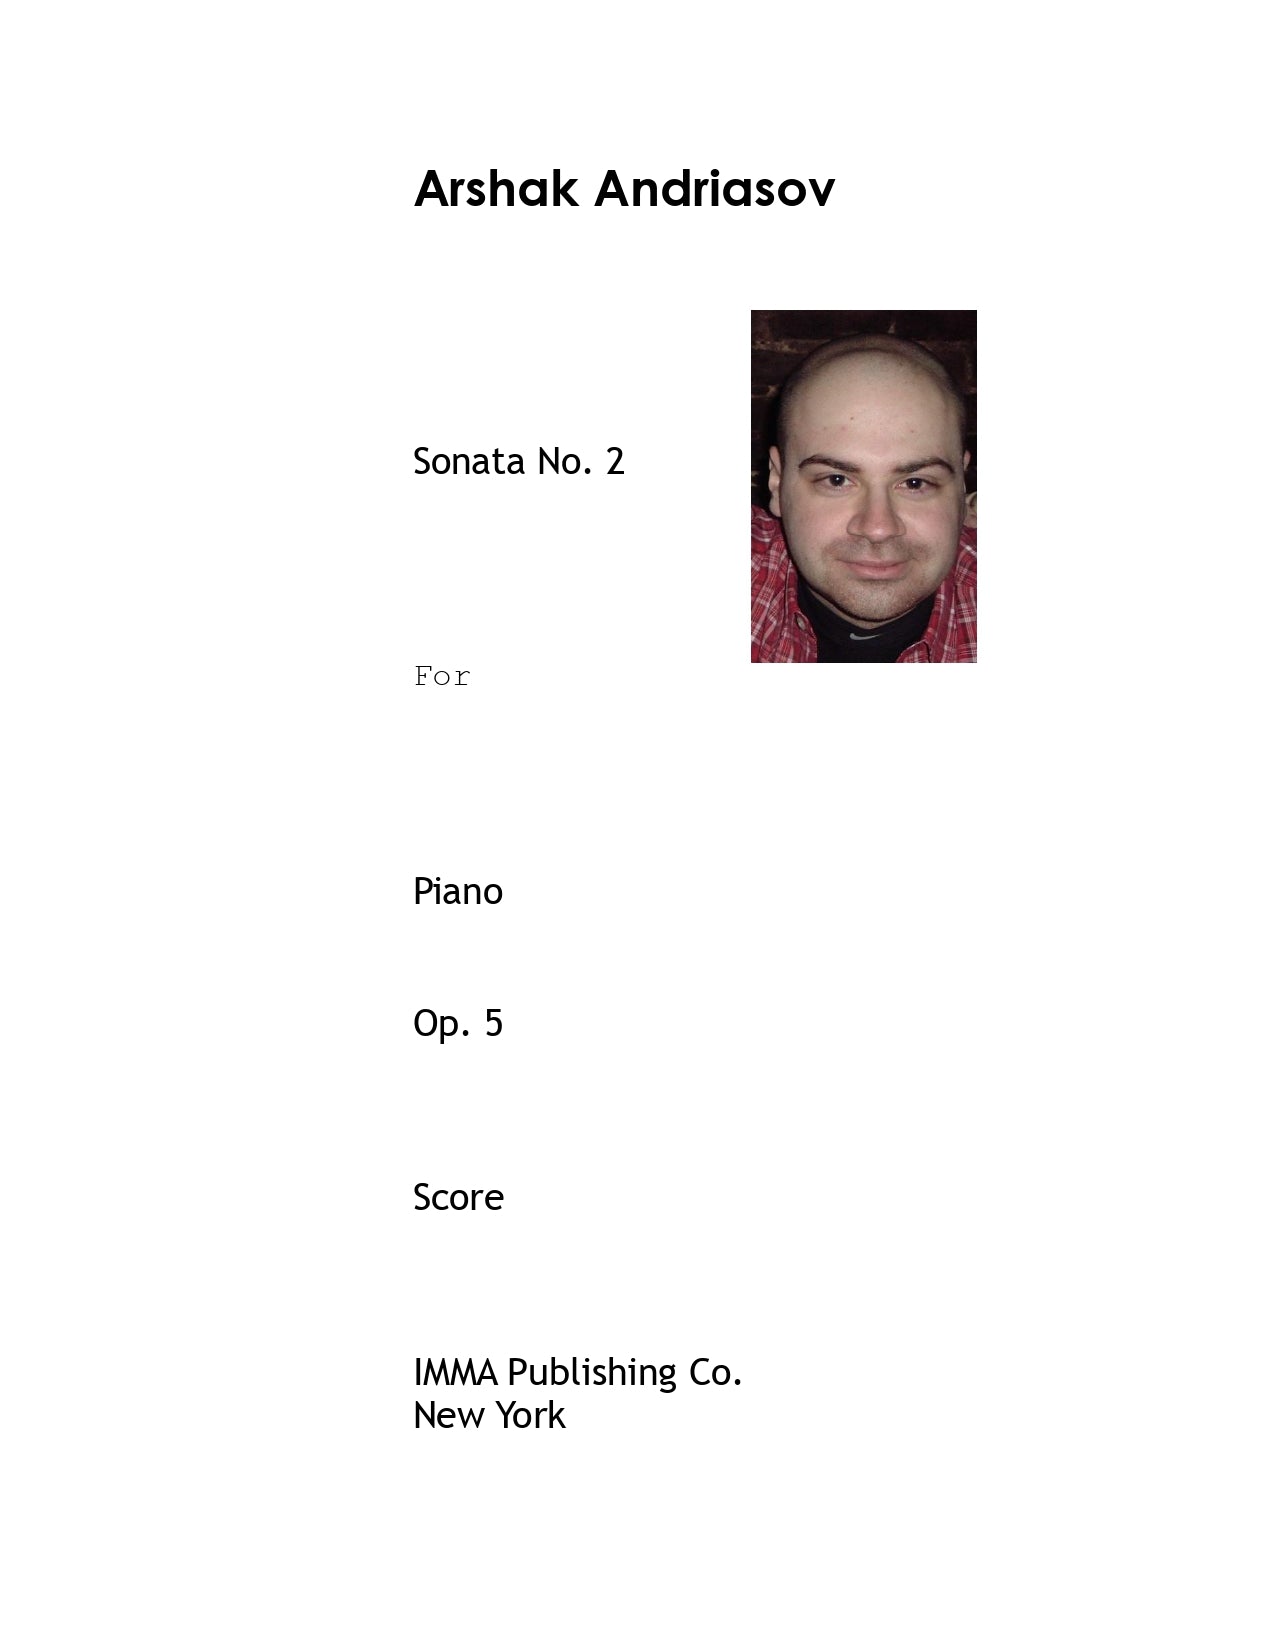 092. Arshak Andriasov: Sonata No. 2, Op. 5 for Piano (PDF)